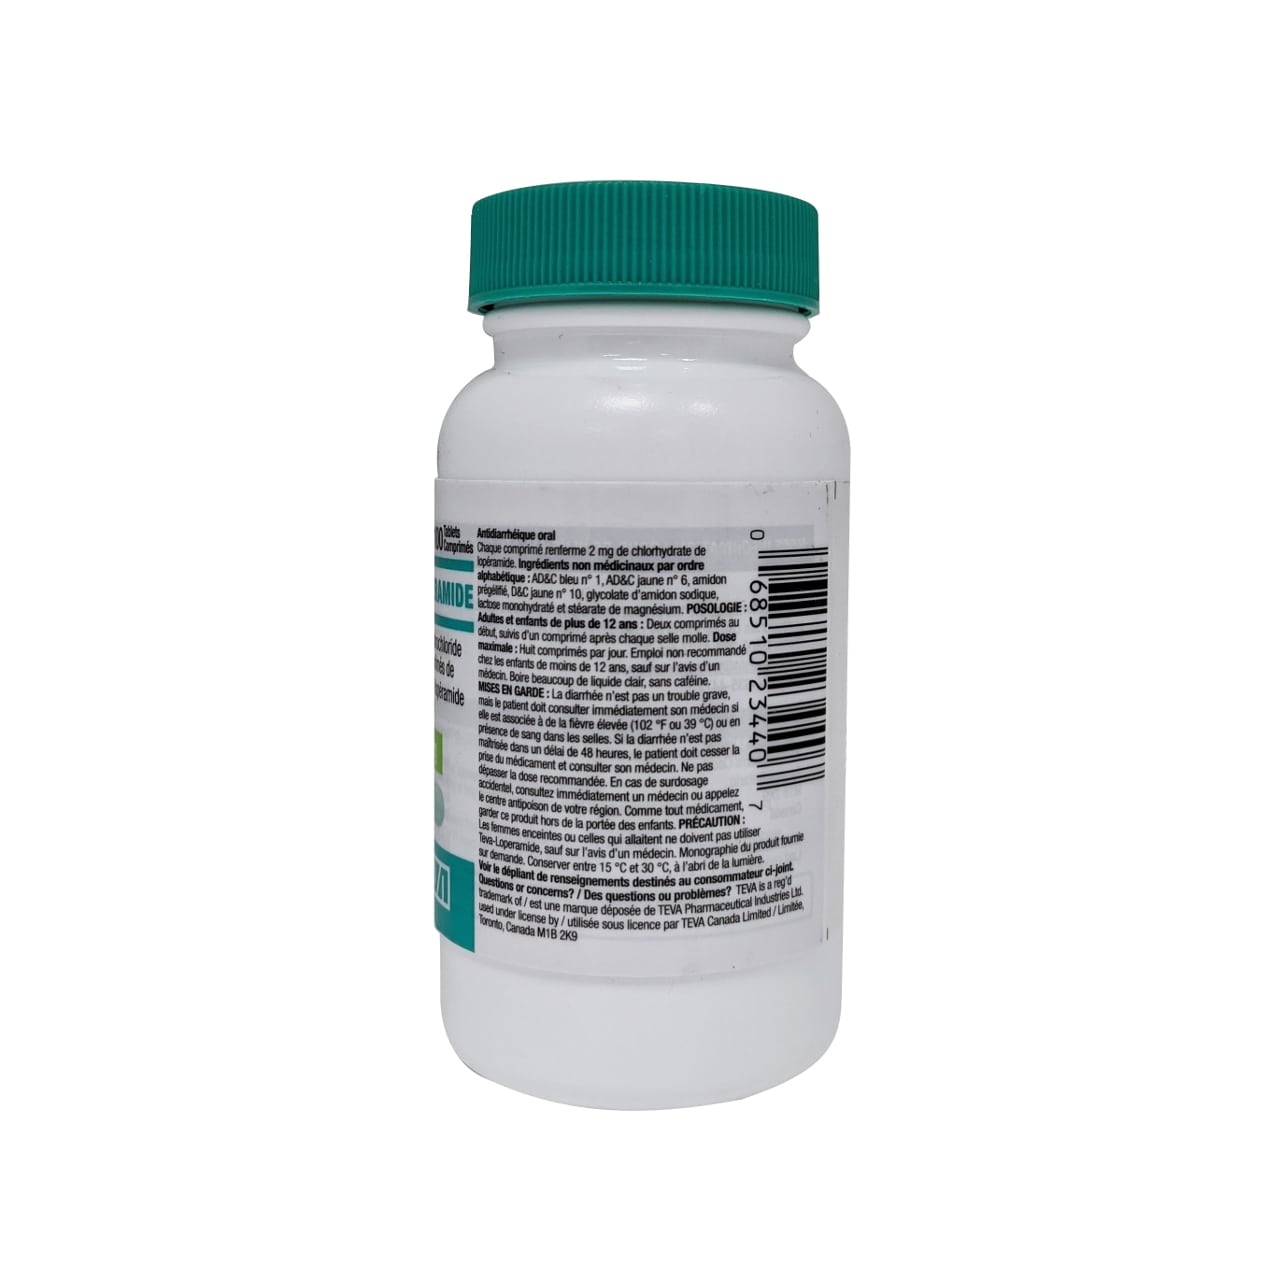 Teva-Loperamide 2mg (100 tablets)